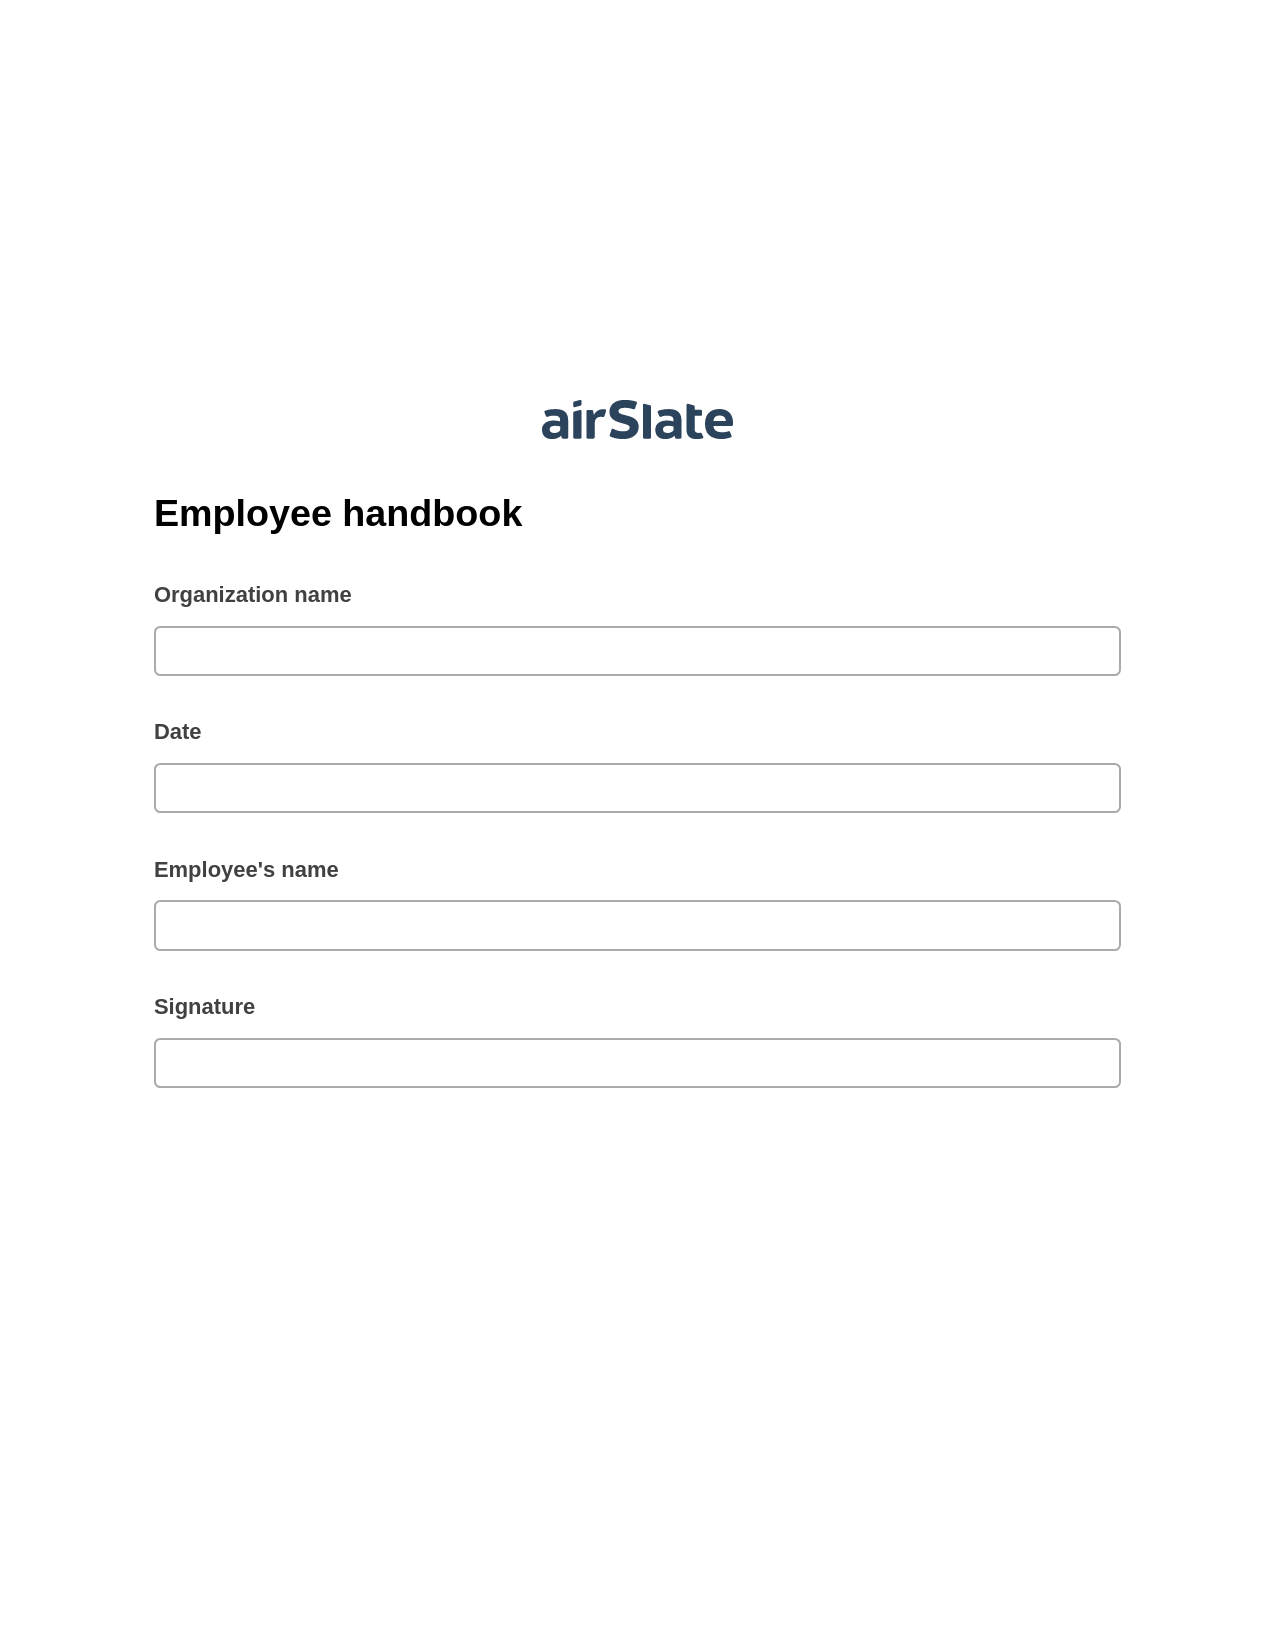 Employee handbook Pre-fill from Excel Spreadsheet Bot, Send a Slate to Salesforce Contact Bot, Google Drive Bot